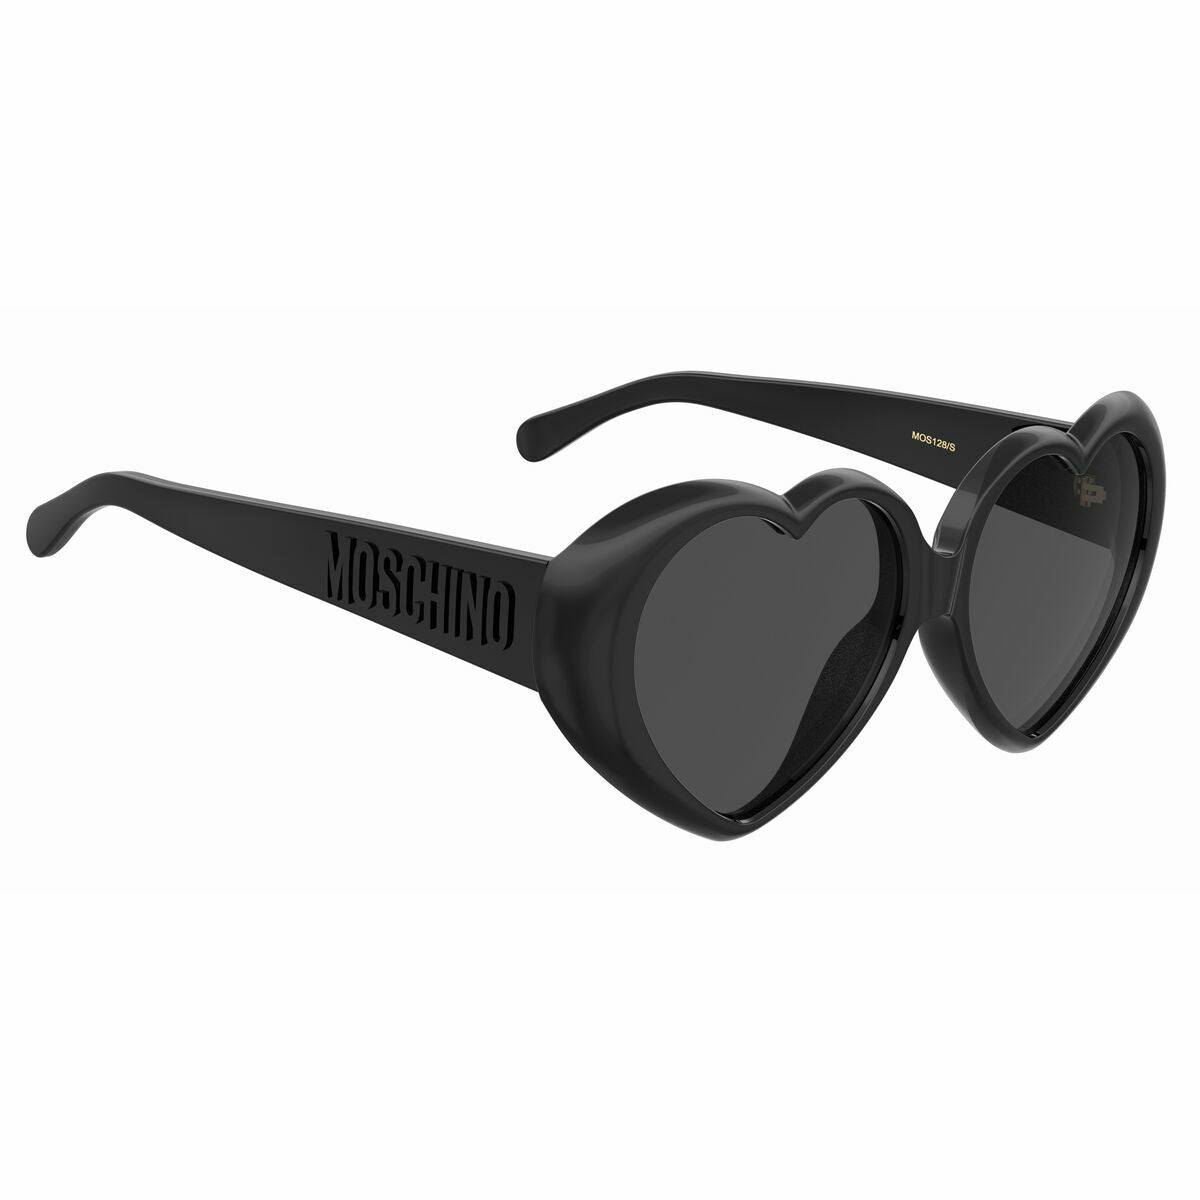 Kaufe Damensonnenbrille Moschino MOS128_S bei AWK Flagship um € 229.00